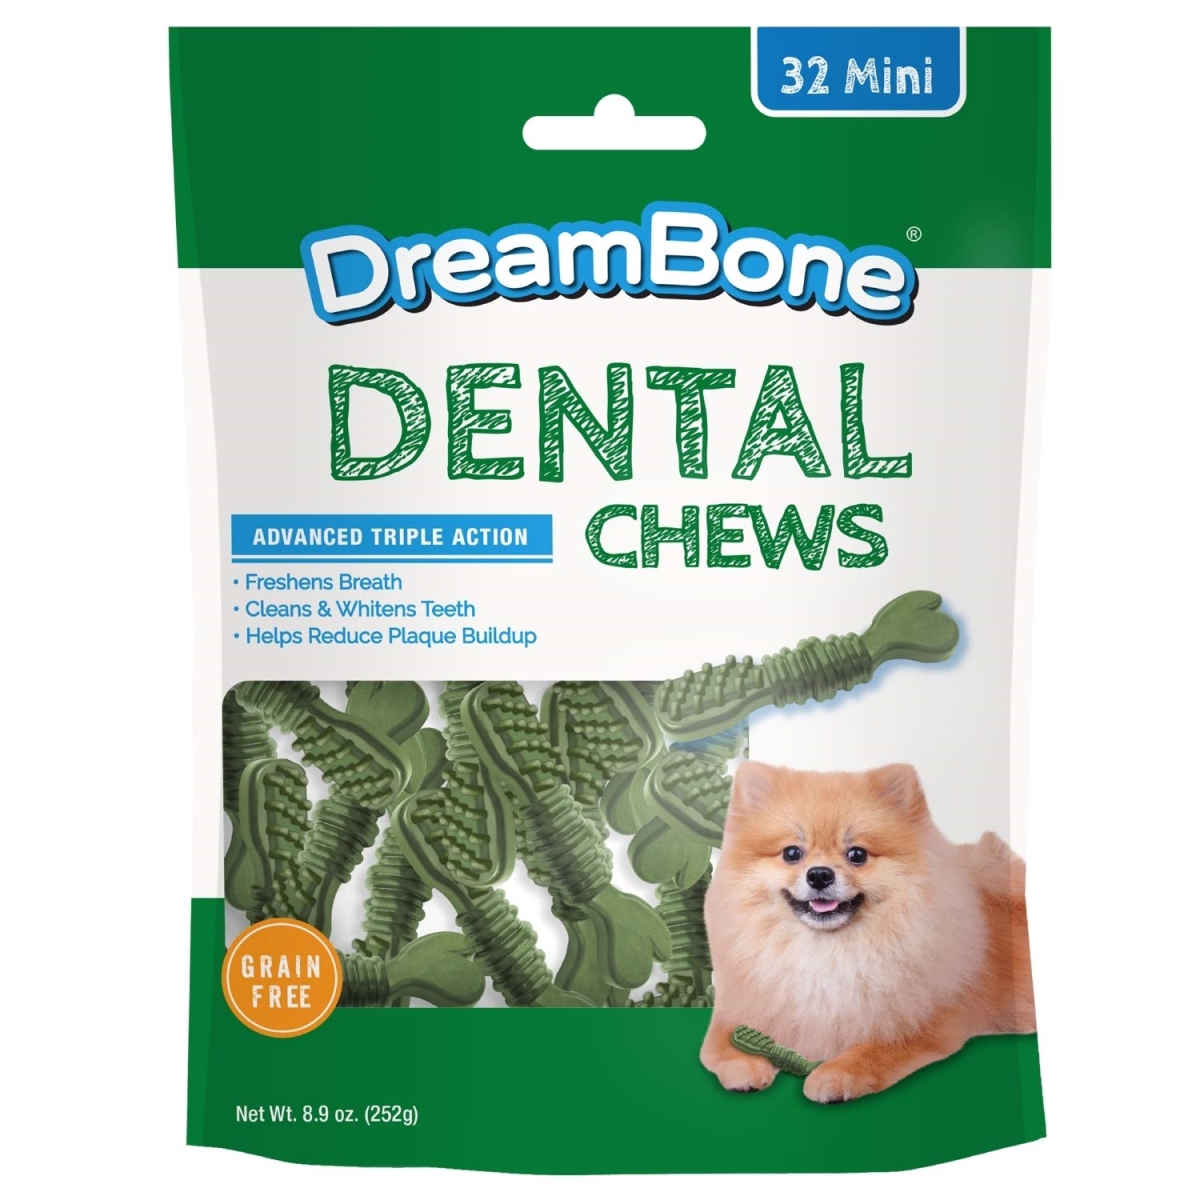 923156 Dreambone Dental Toothbrush, Mini - Pack Of 32